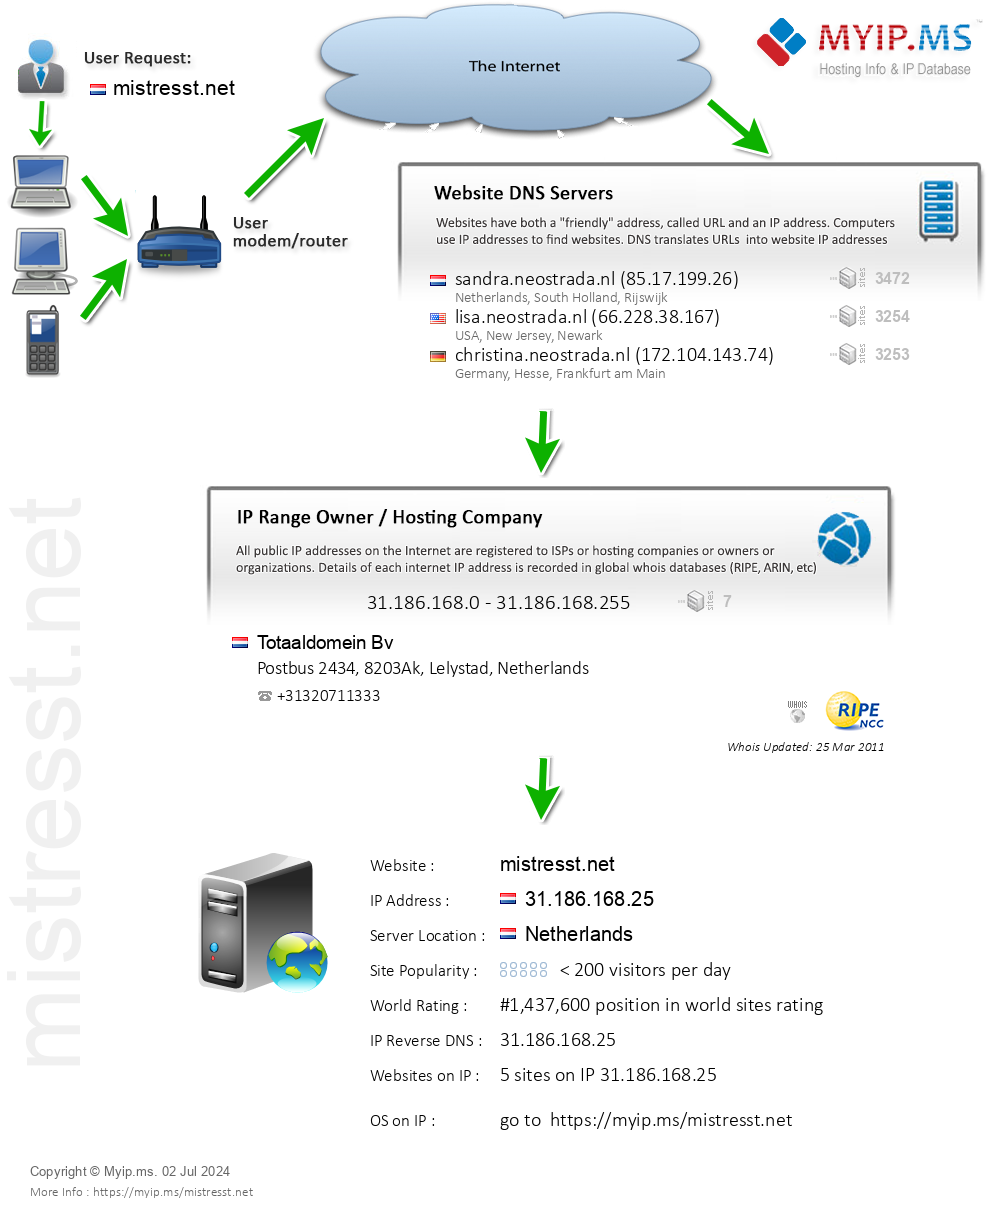 Mistresst.net - Website Hosting Visual IP Diagram